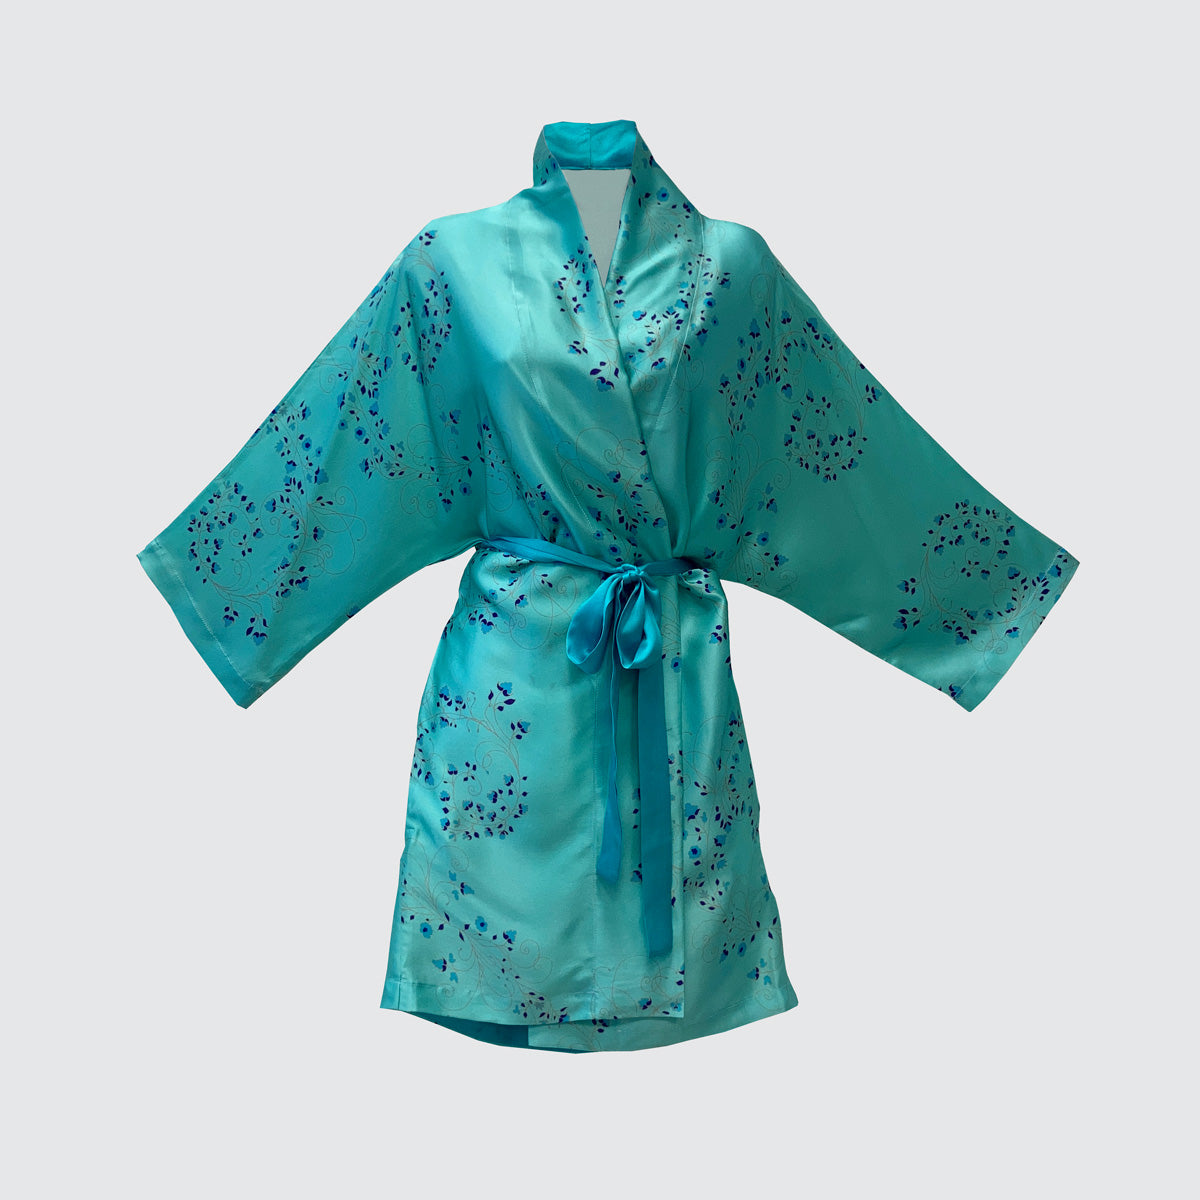 Silk Kimono turquoise with fibonnacci curve flowers